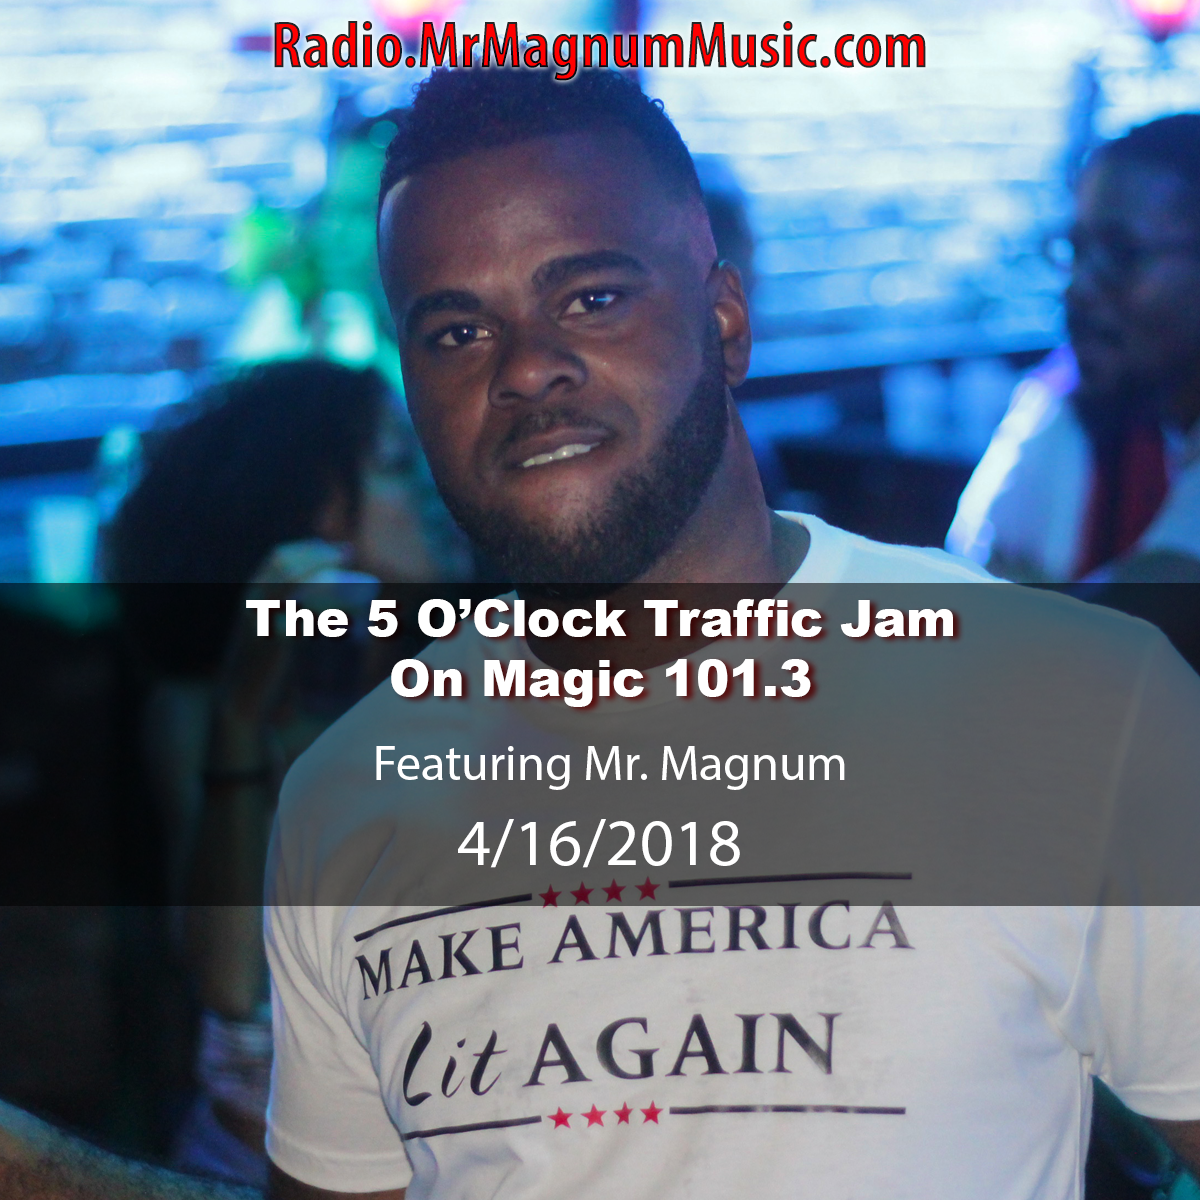 The 5 O'Clock Traffic Jam 20180416 featuring Gainesville's #1 DJ, Mr. Magnum on Magic 101.3